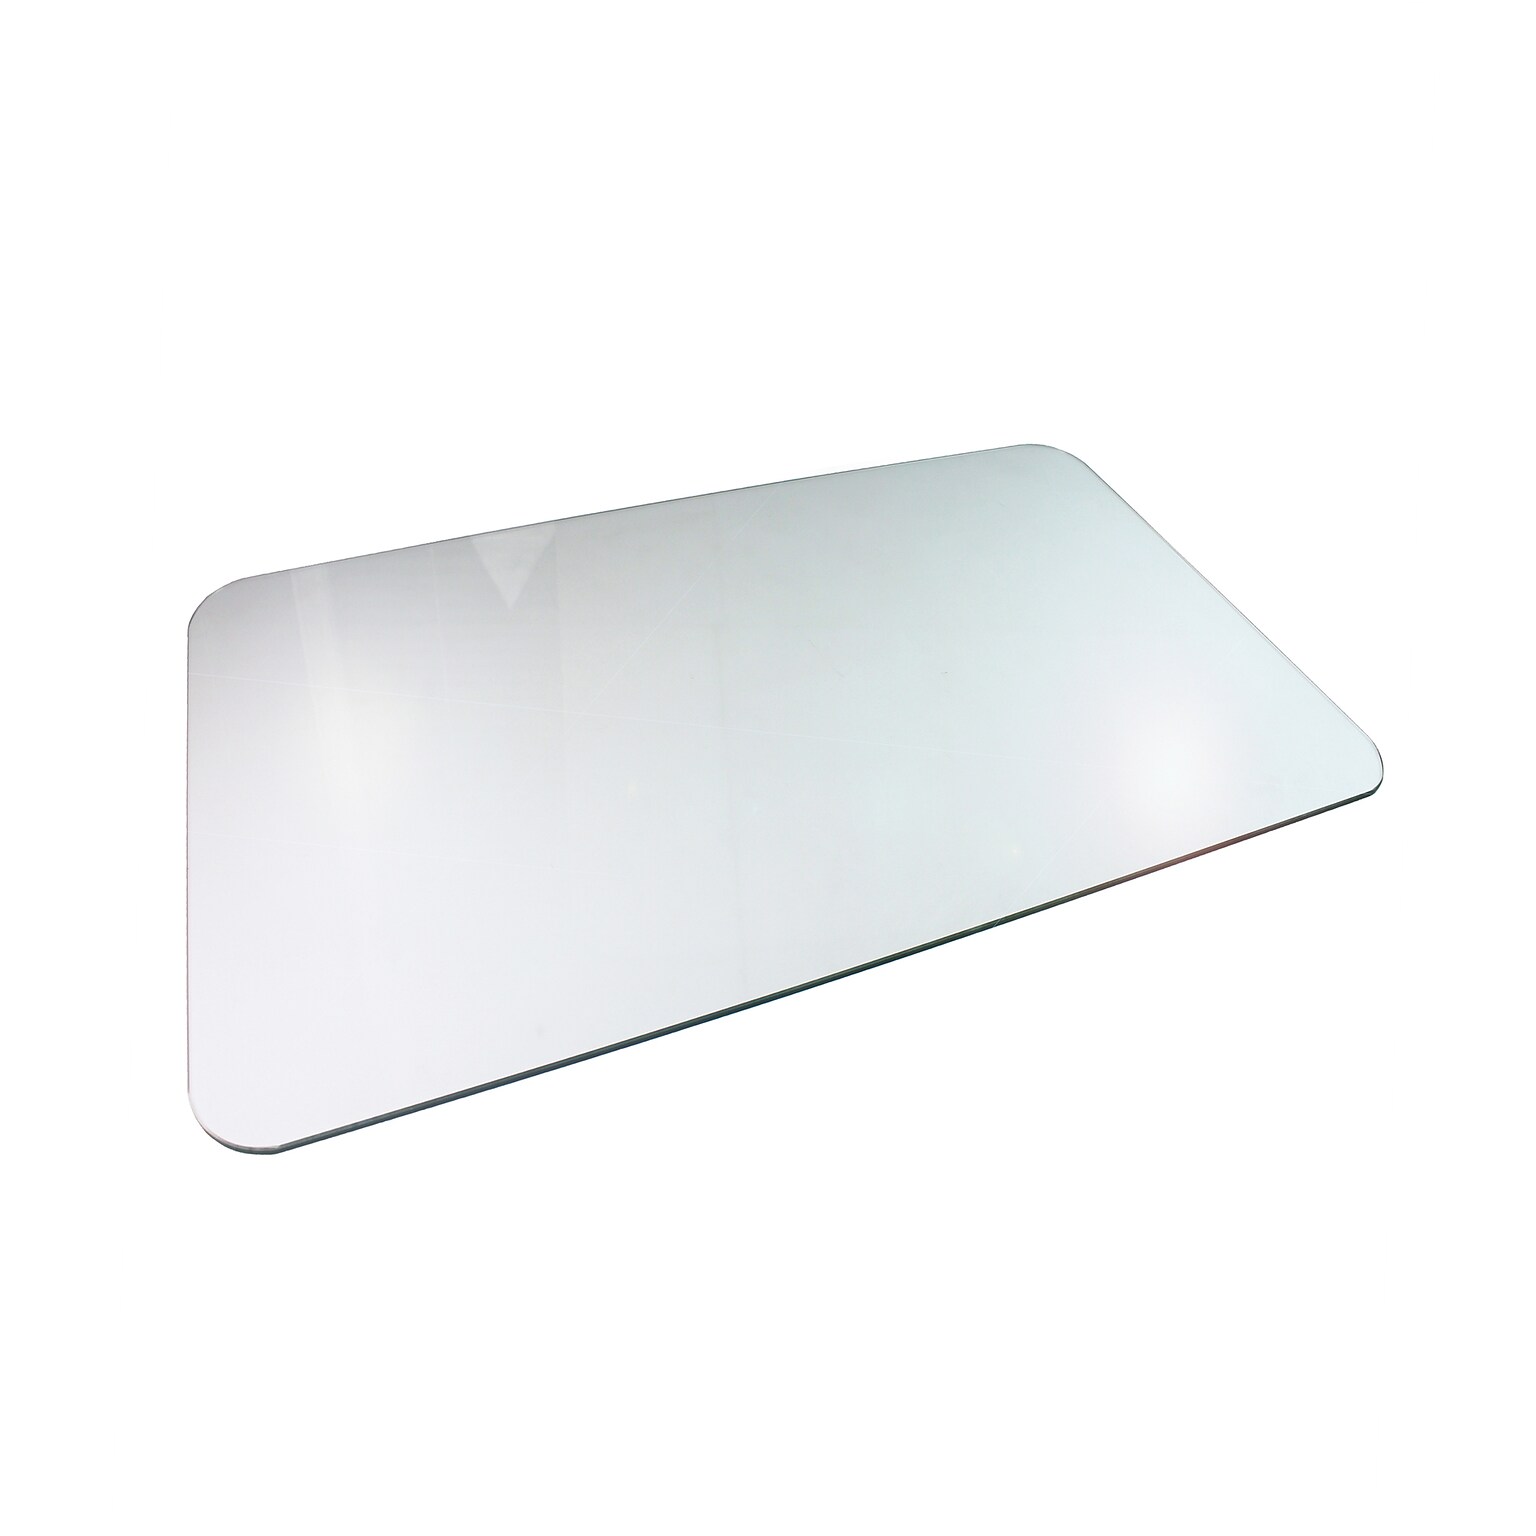 Floortex Cleartex Glaciermat Carpet & Hard Floor Chair Mat, 36 x 48, Crystal Clear Glass (FC123648EG)